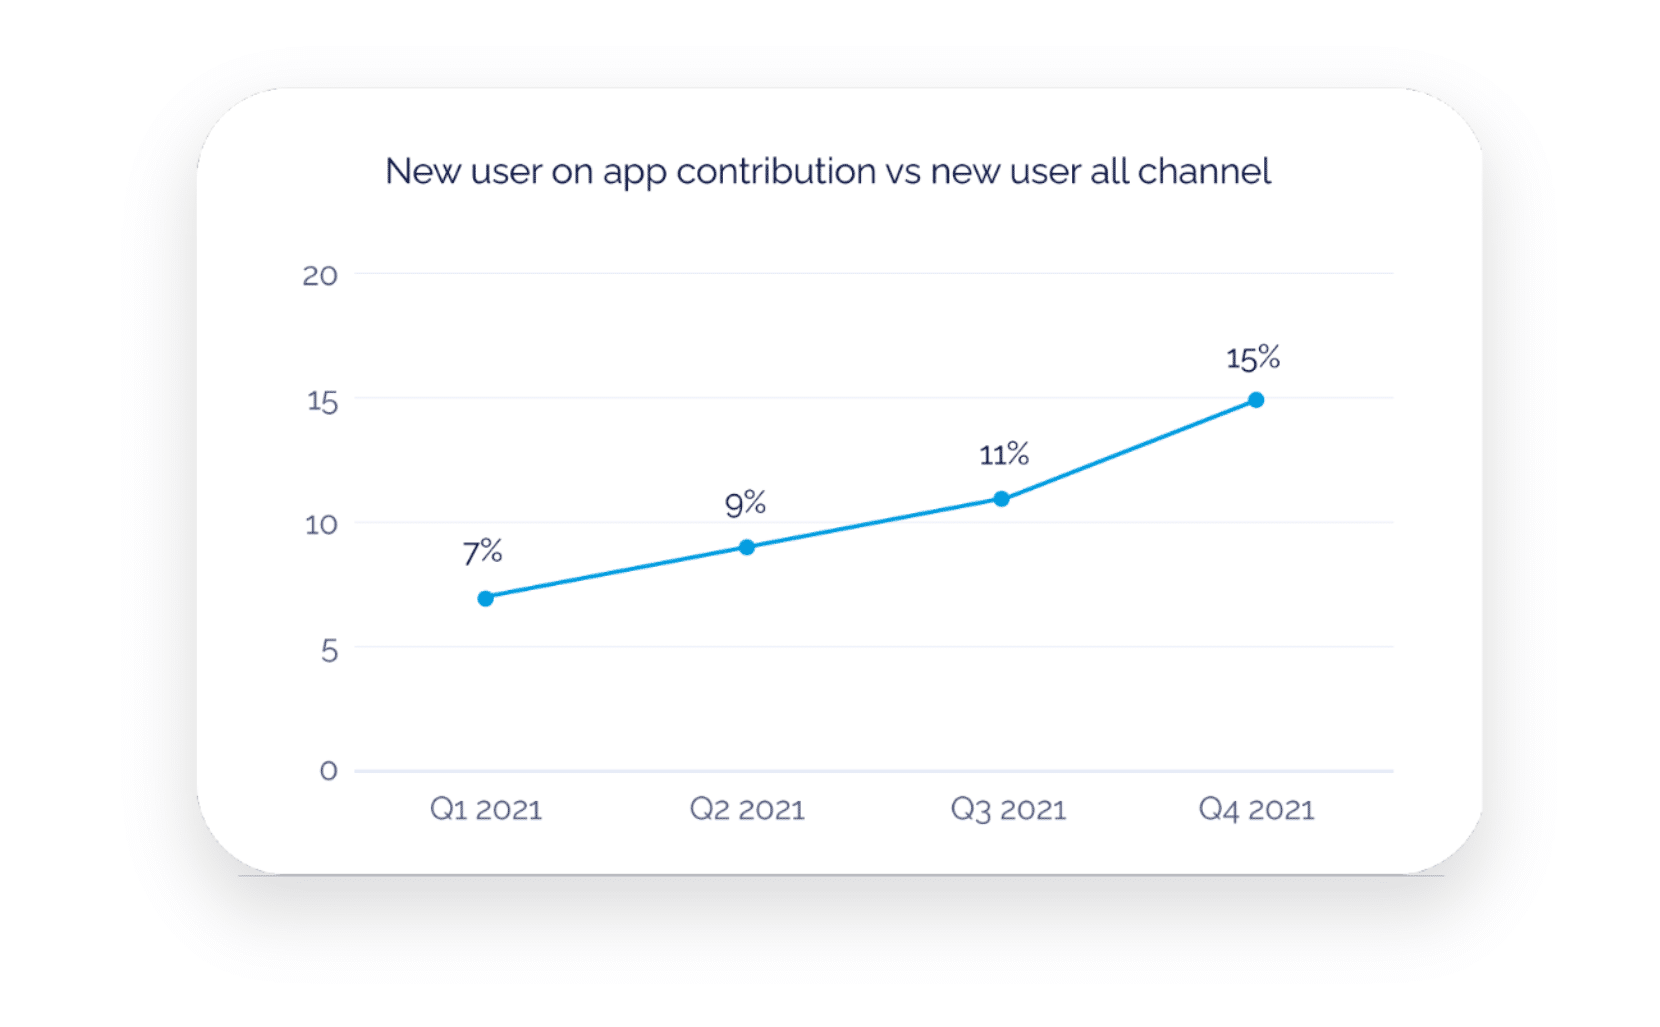 Line graph depicting the quarter-over-quarter growth of new app users. Q1 2021: 7% Q2 2021: 9% Q3 2021: 11% Q4 2021: 15%